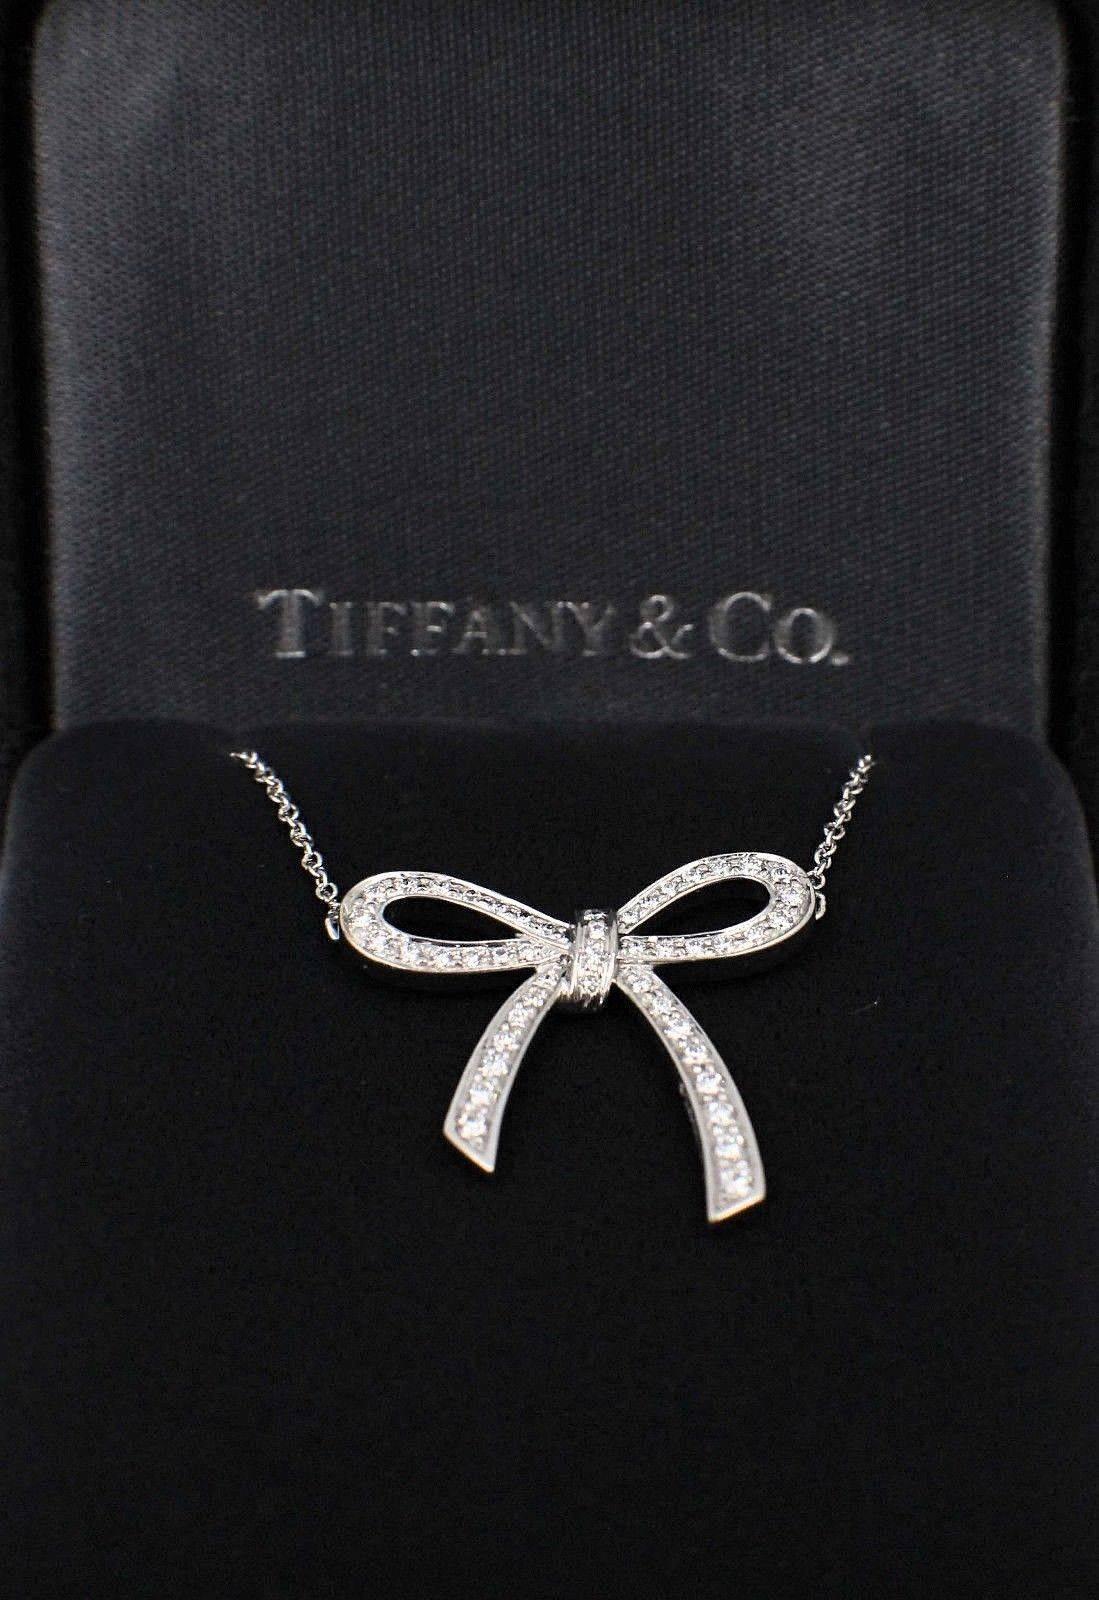 Tiffany & Co.
Style:  Diamond Bow Necklace
Metal:  Platinum PT950
Length:  16.25